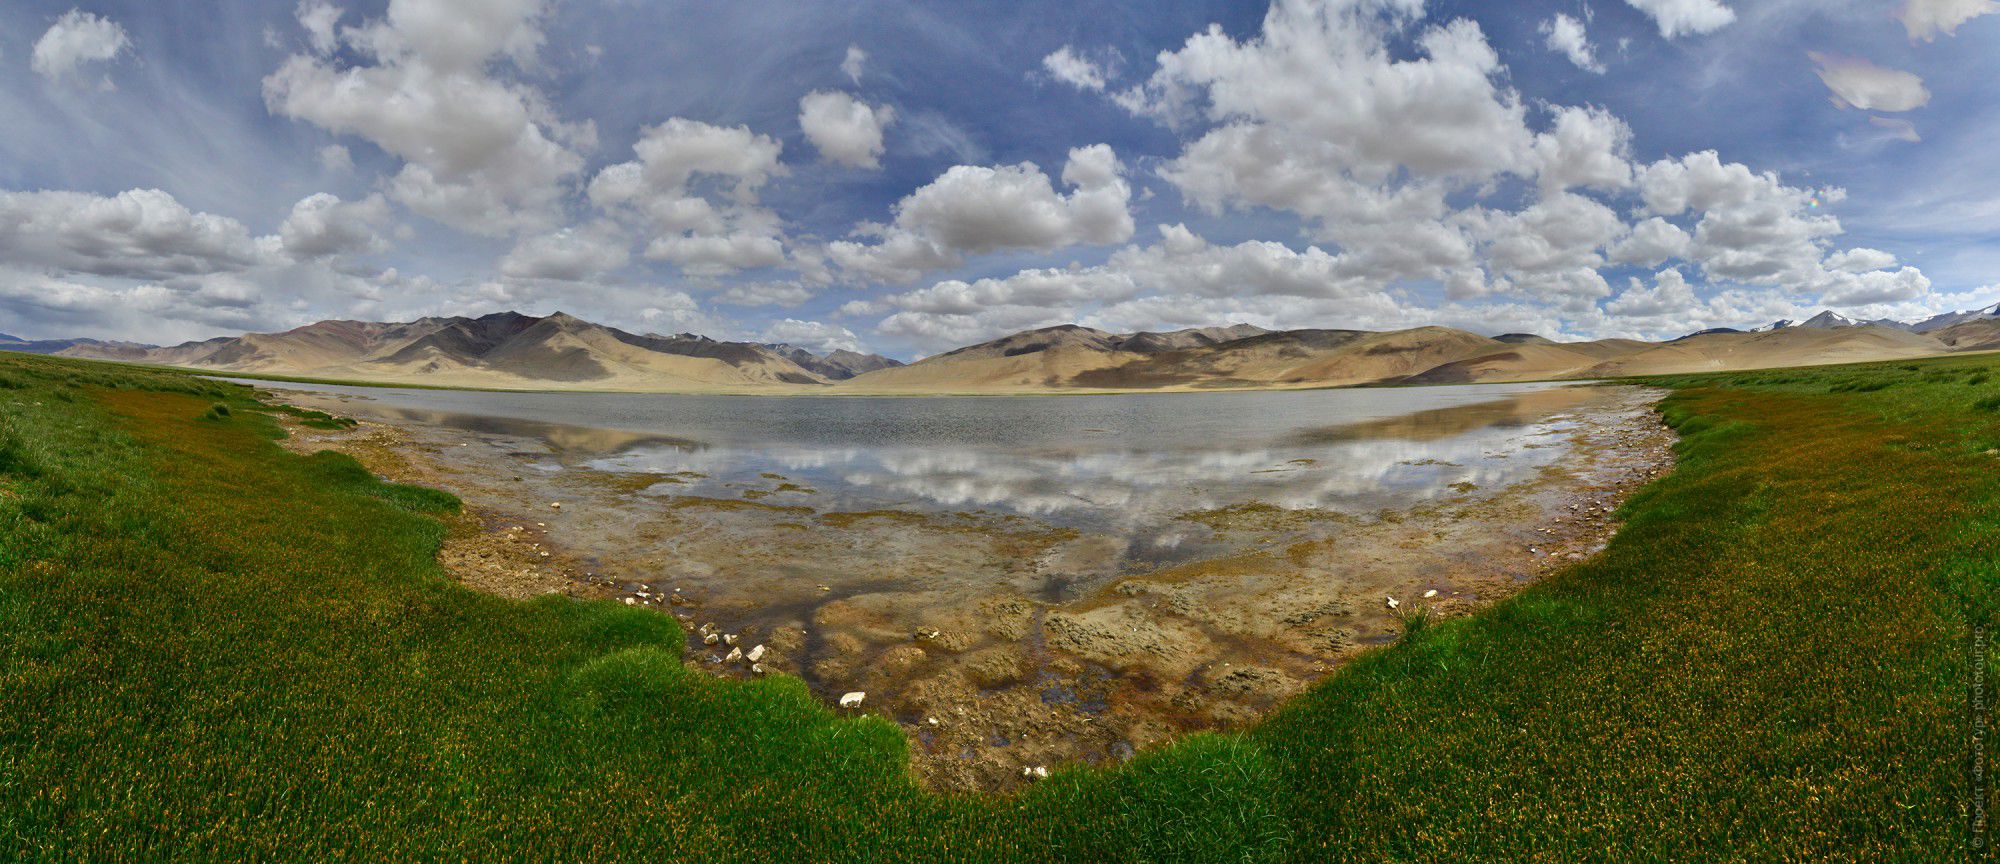 Фотография озера Tso Startspuk:Озеро Tso Startspuk, панорама, долина Рупшу, Ладакх. Фототур на озеро Tso Startspuk, июль 2014 года.